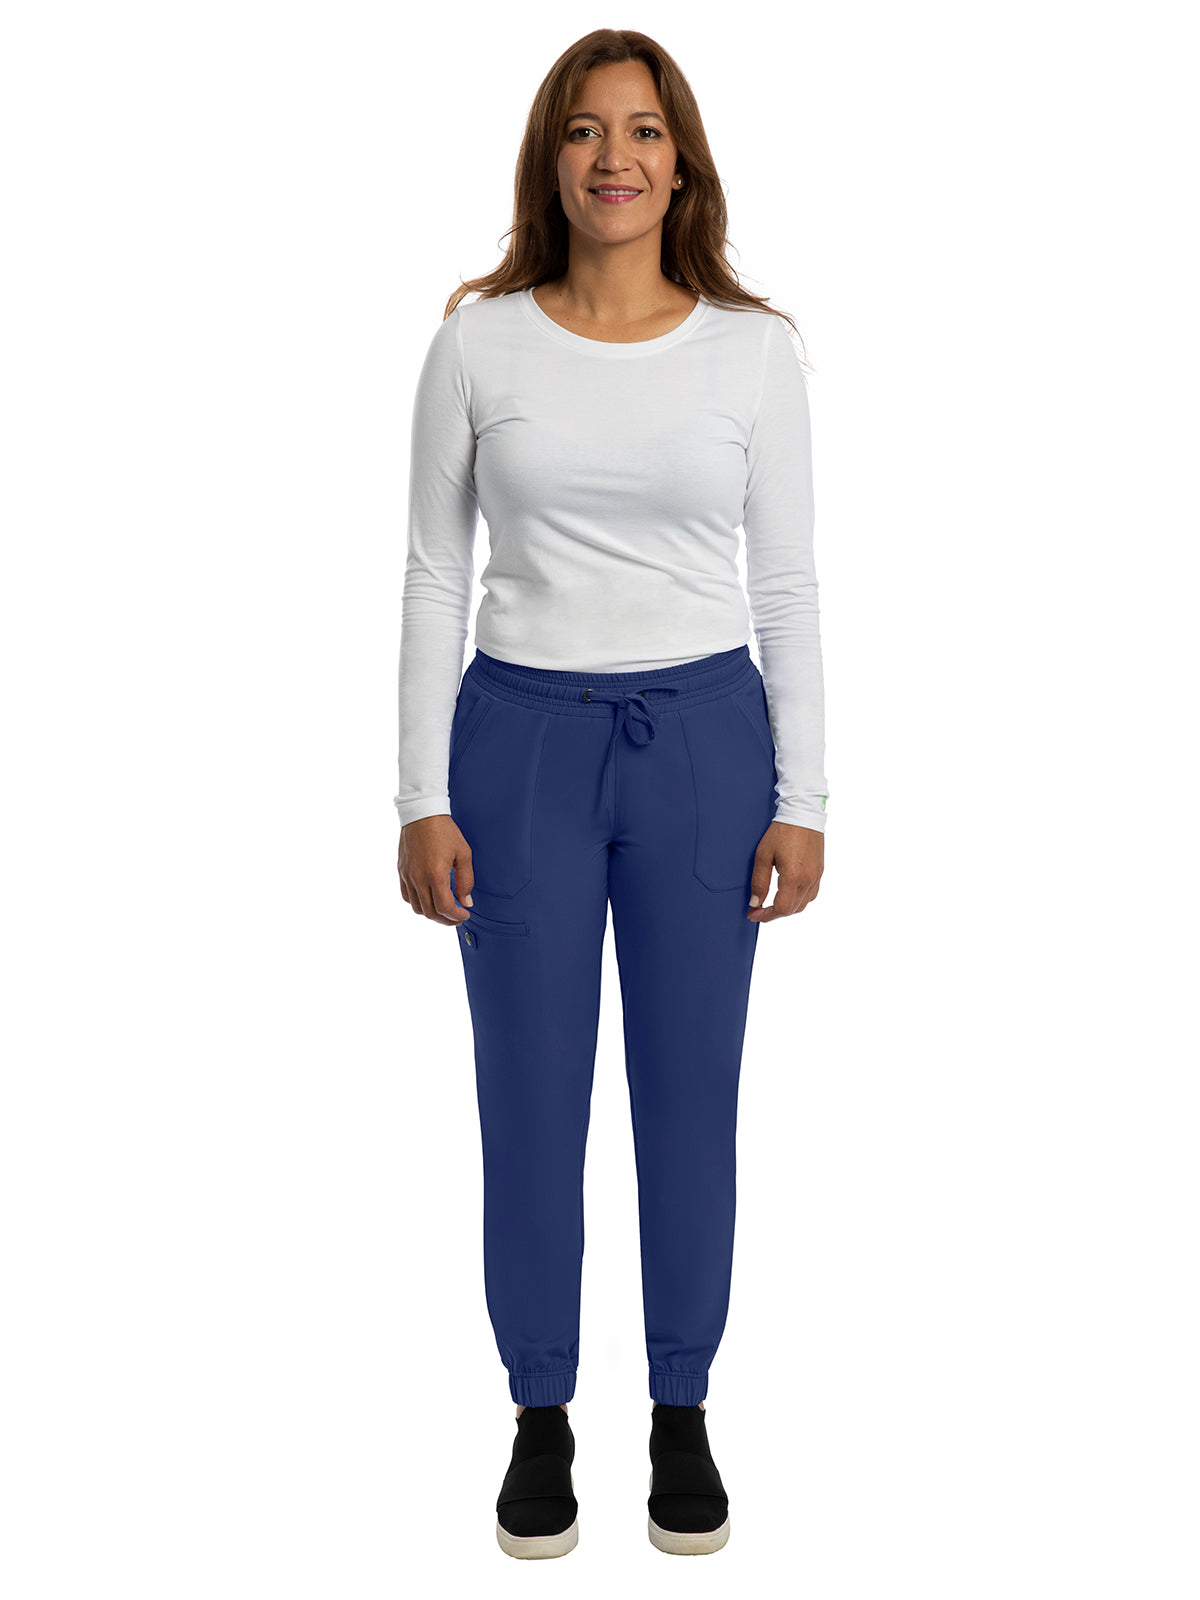 Women's Four-Way Stretch Fabric Pant - 9575 - Navy